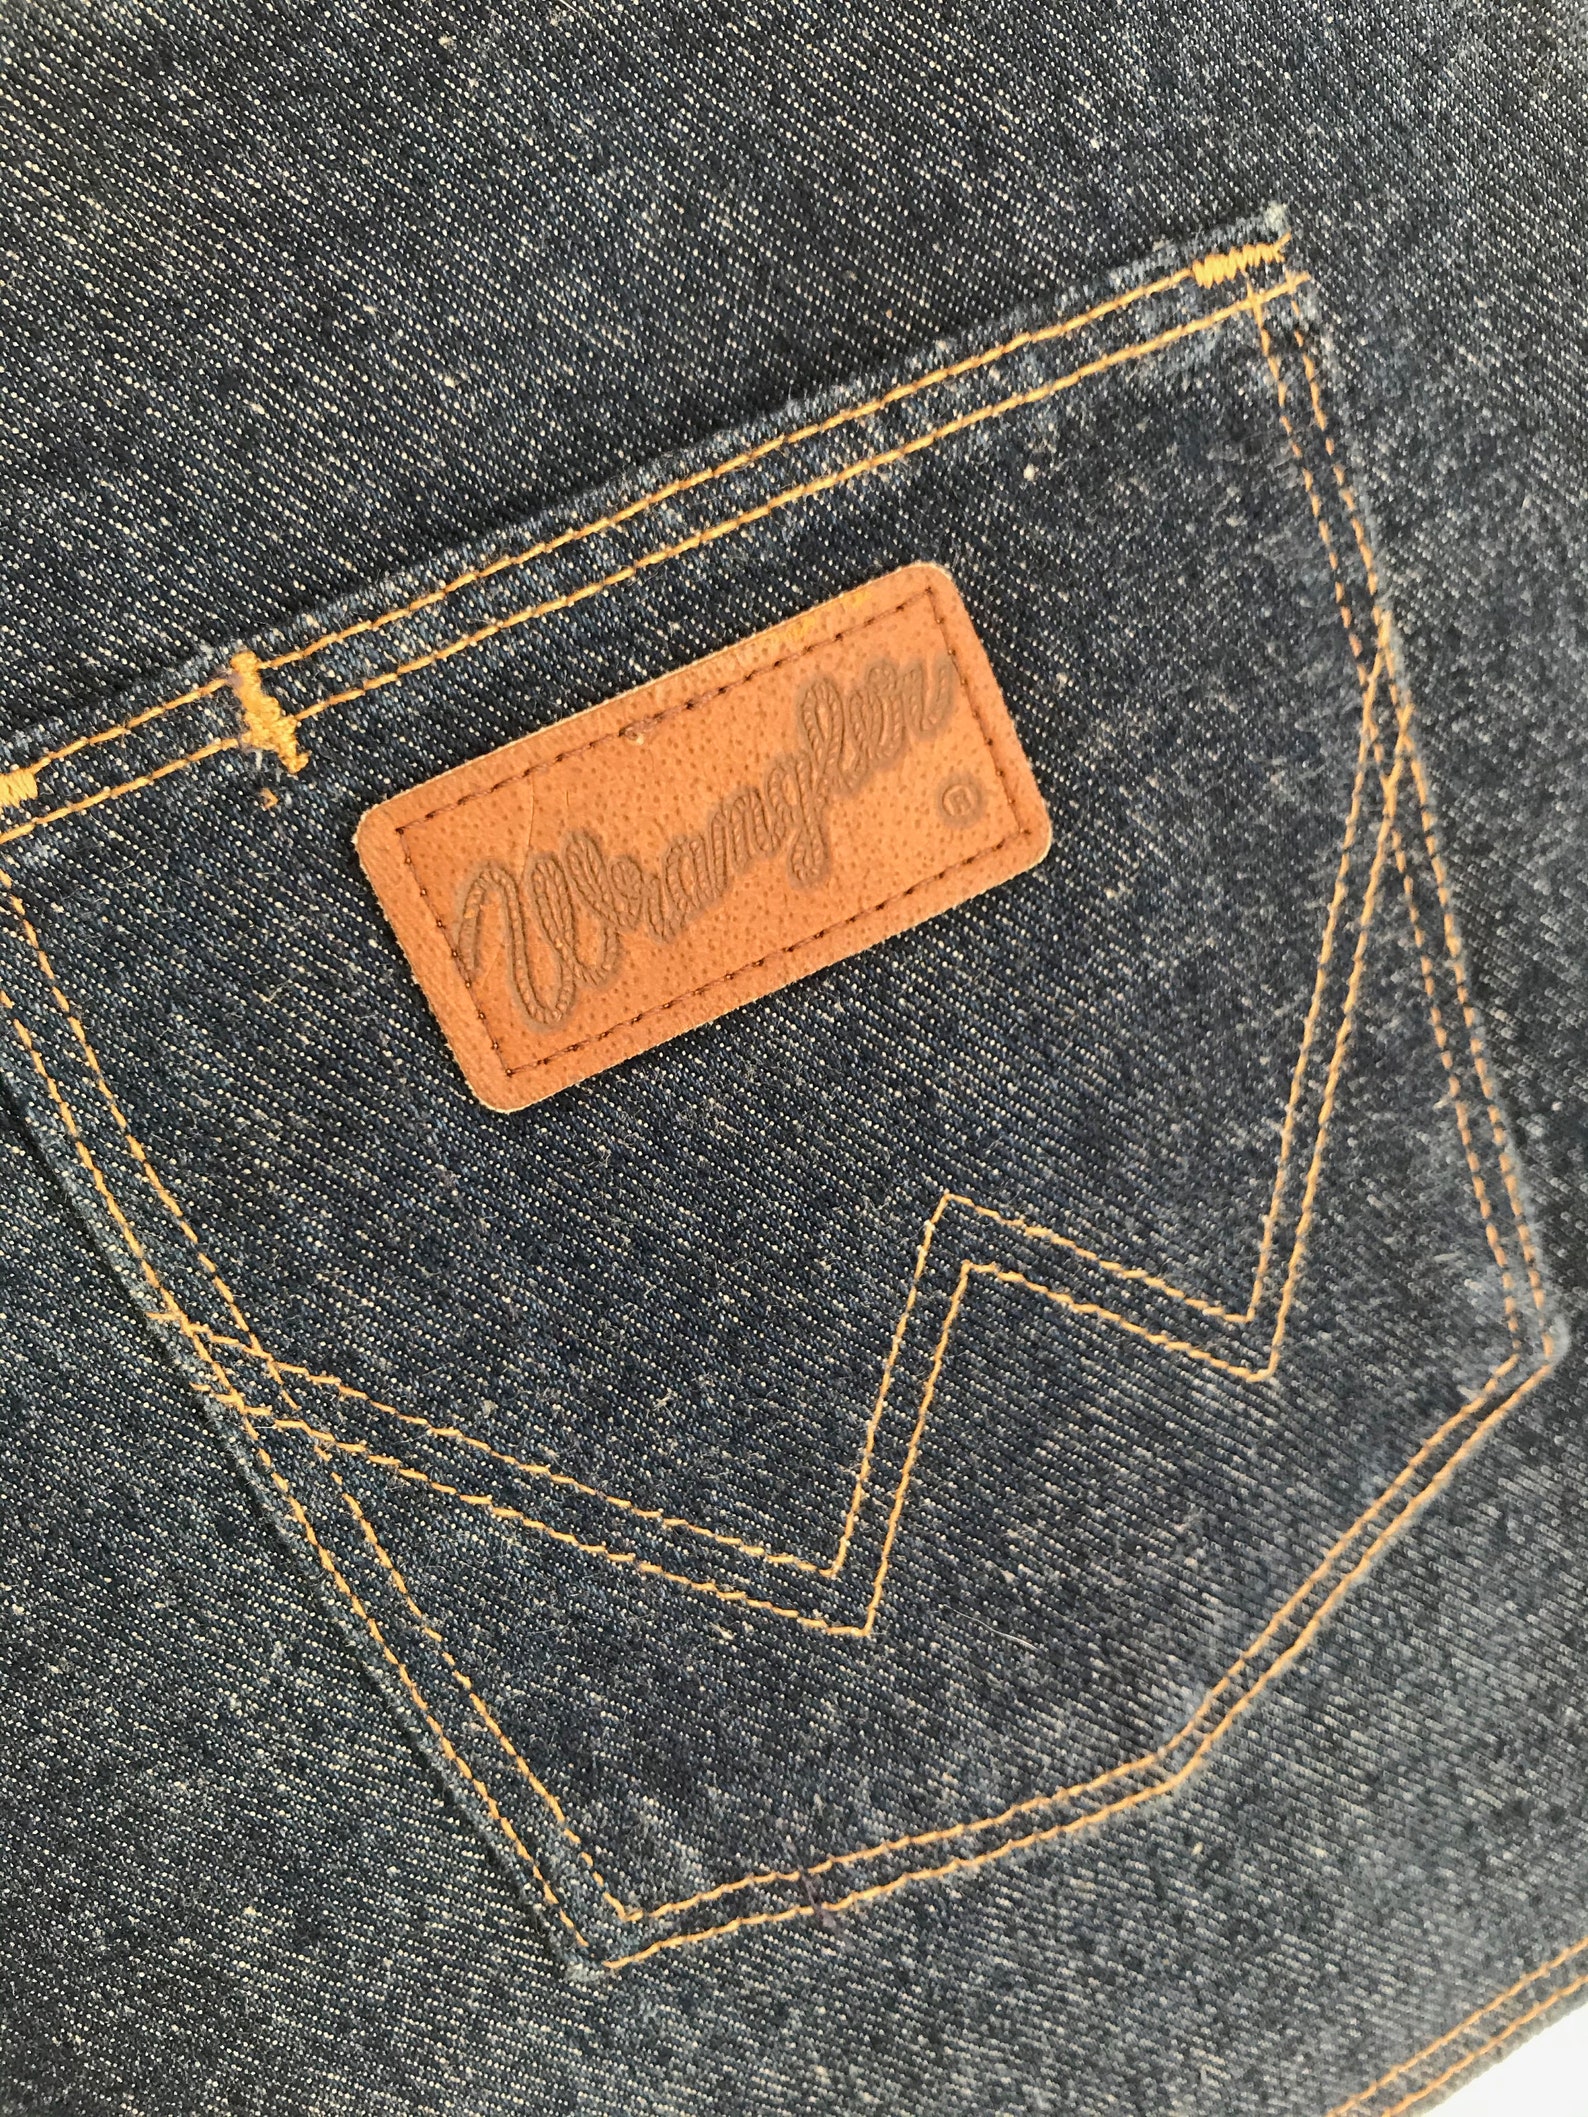 Wrangler Vintage Briefcase 1970s Portfolio in Blue Jeans | Etsy